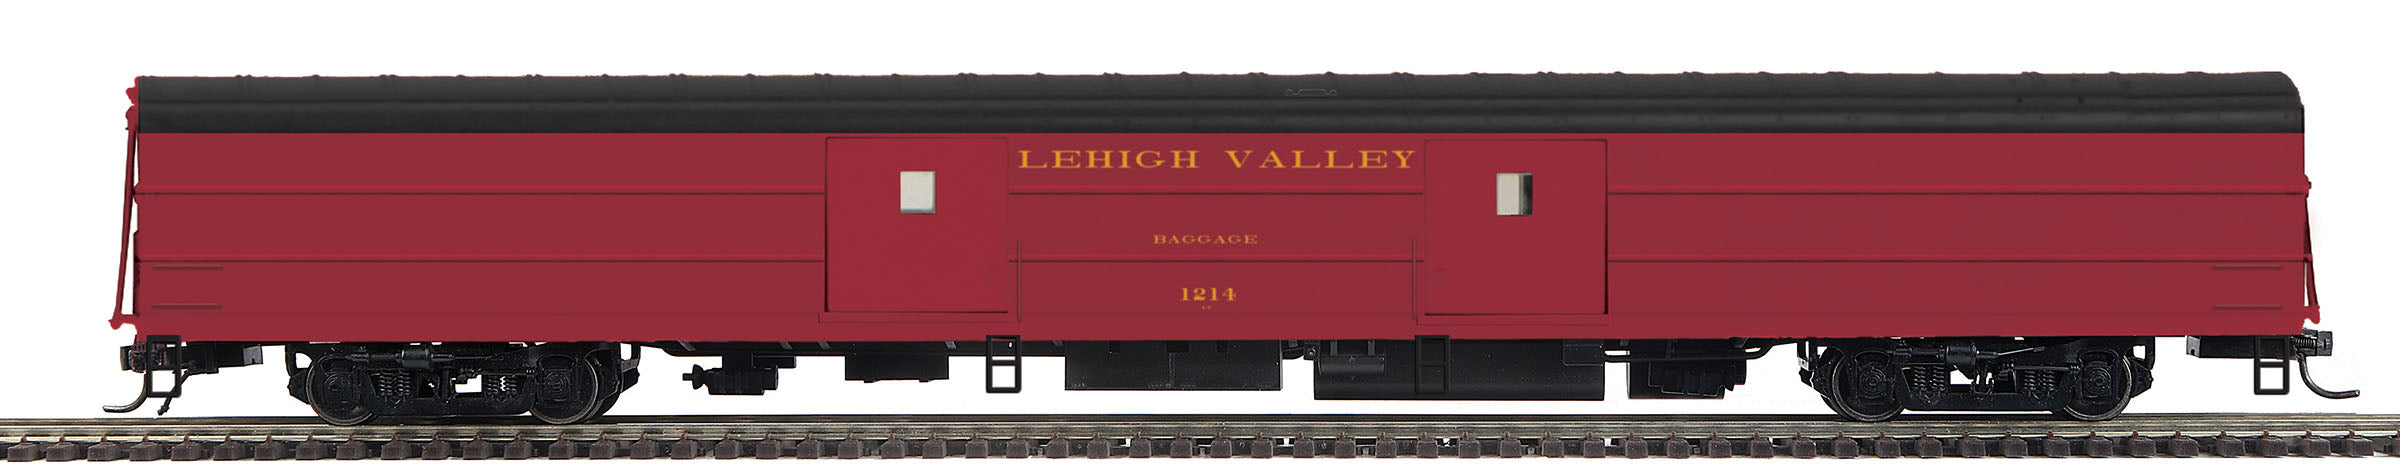 Railking Lehigh Valley Passenger, Luggage, Cars